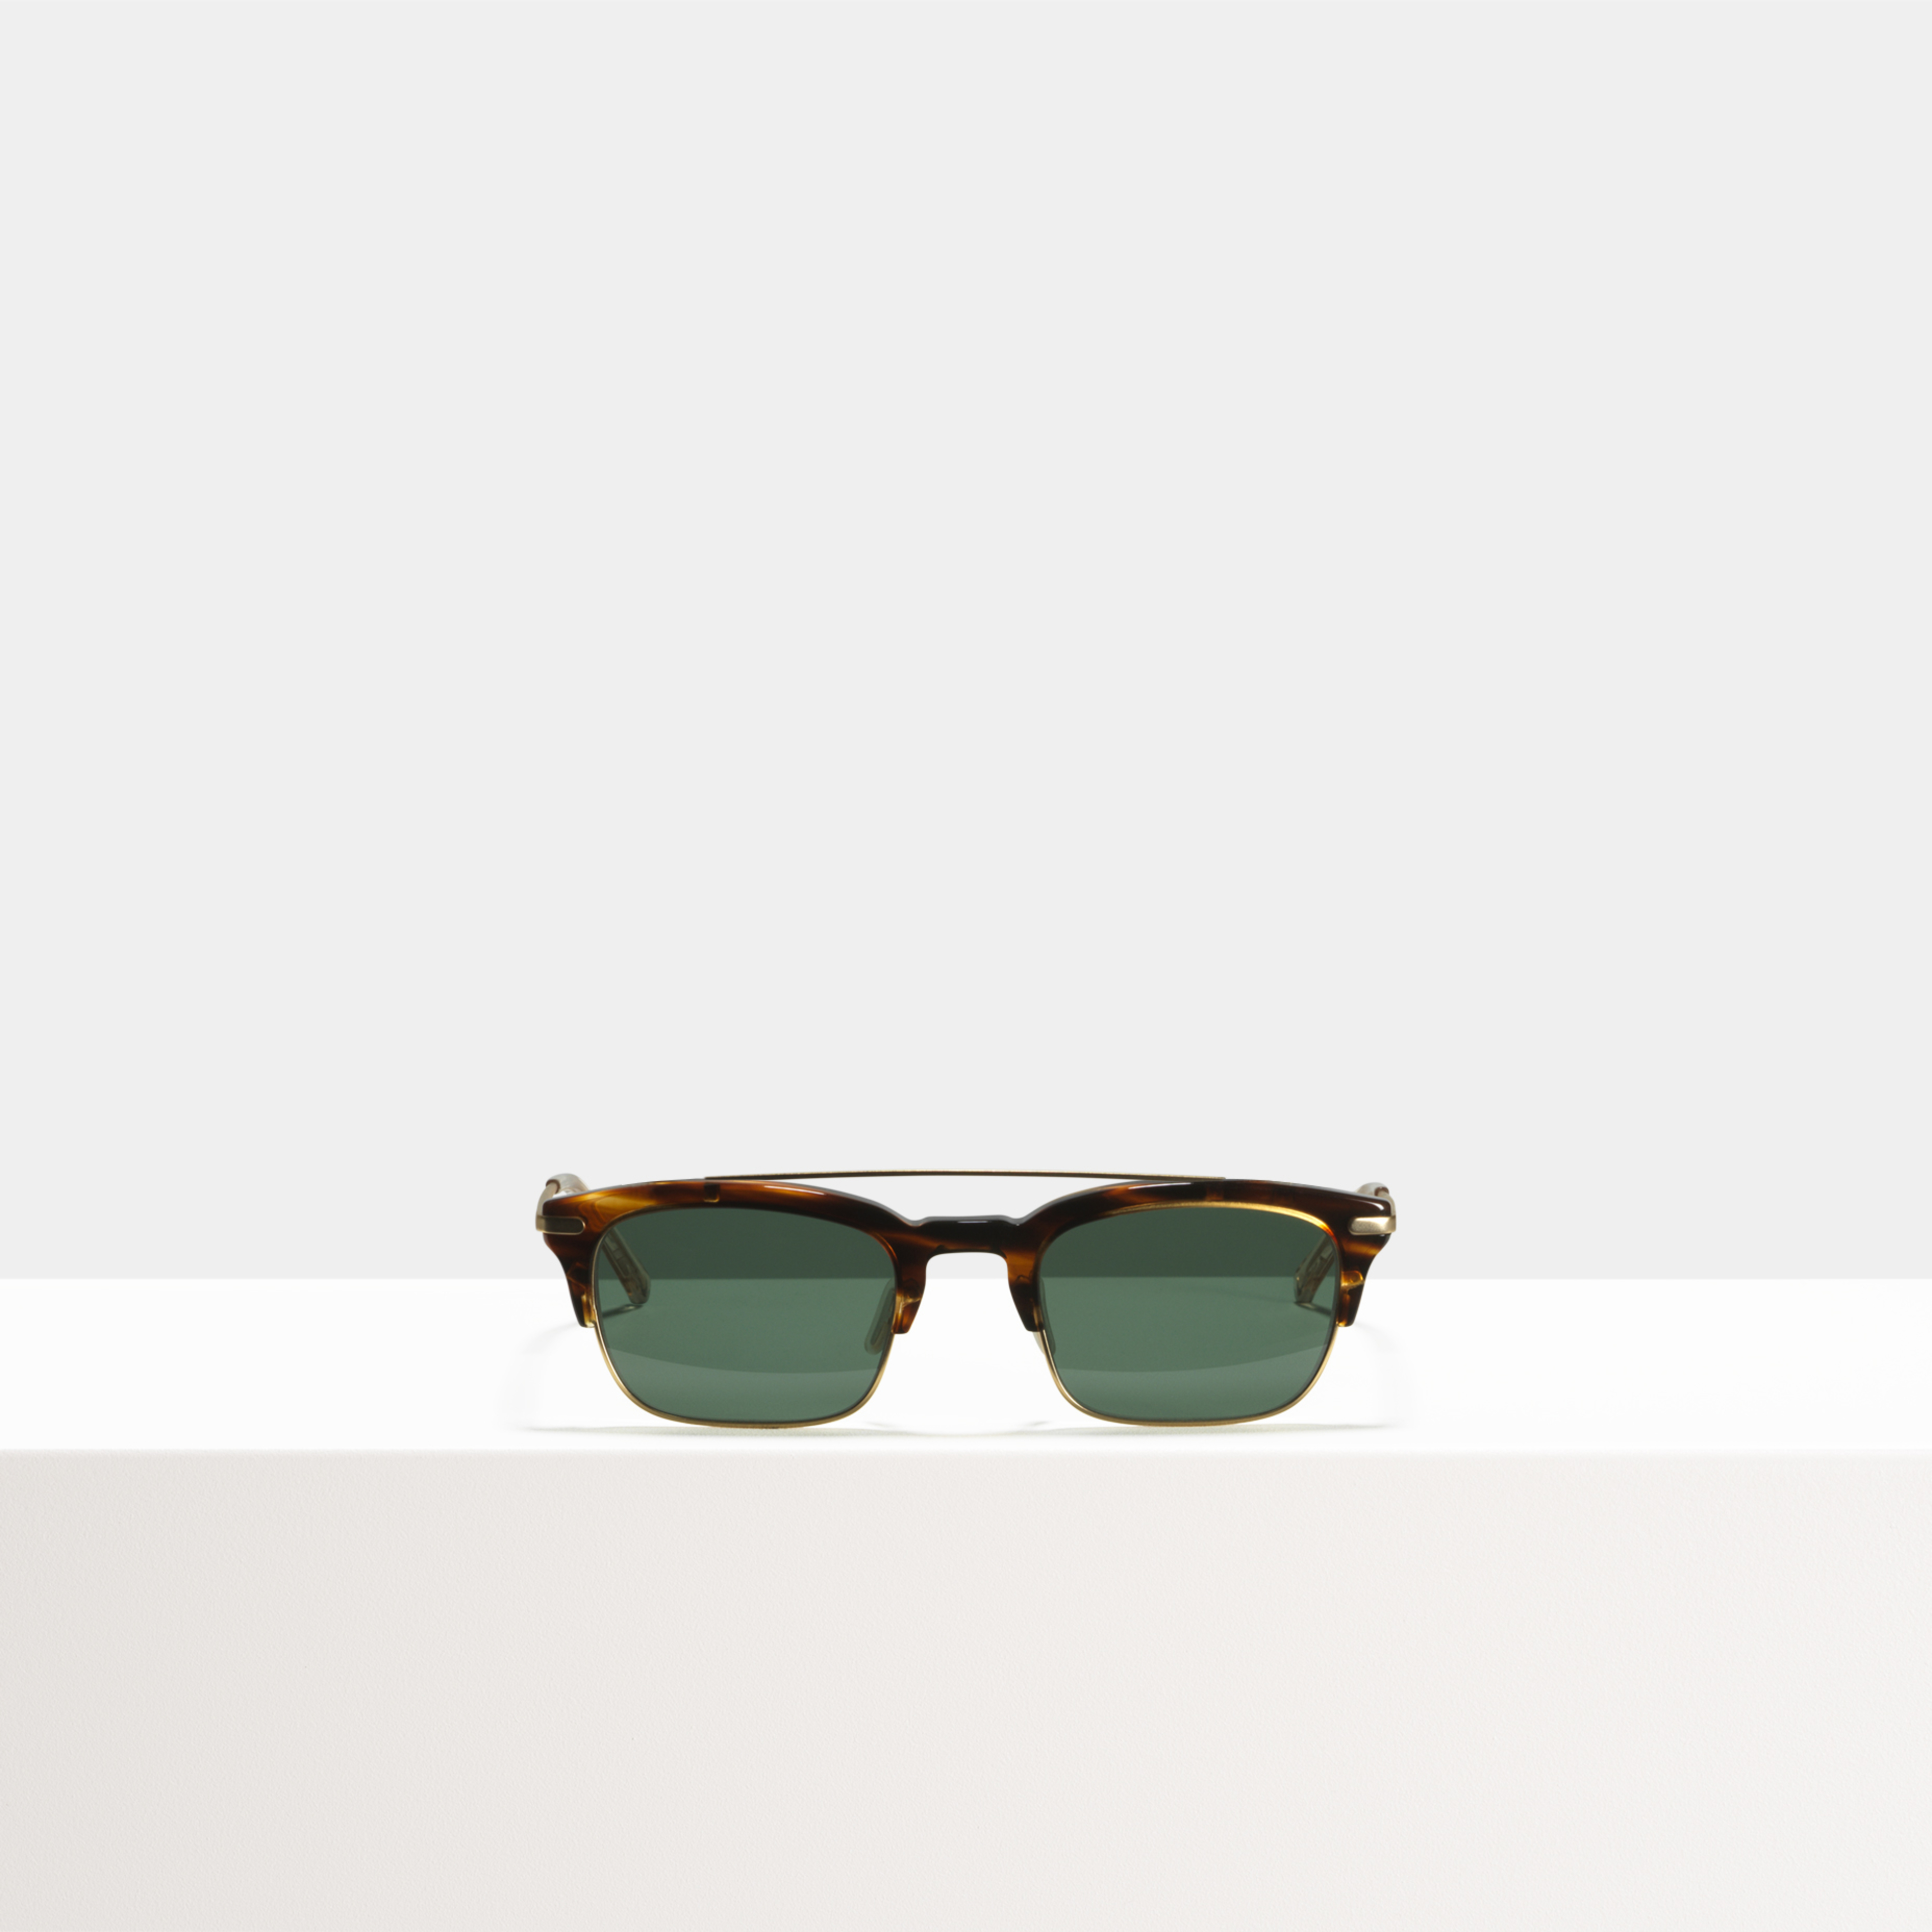 Ace & Tate Gafas de sol | rectangulares combinación in Marrón, Naranja